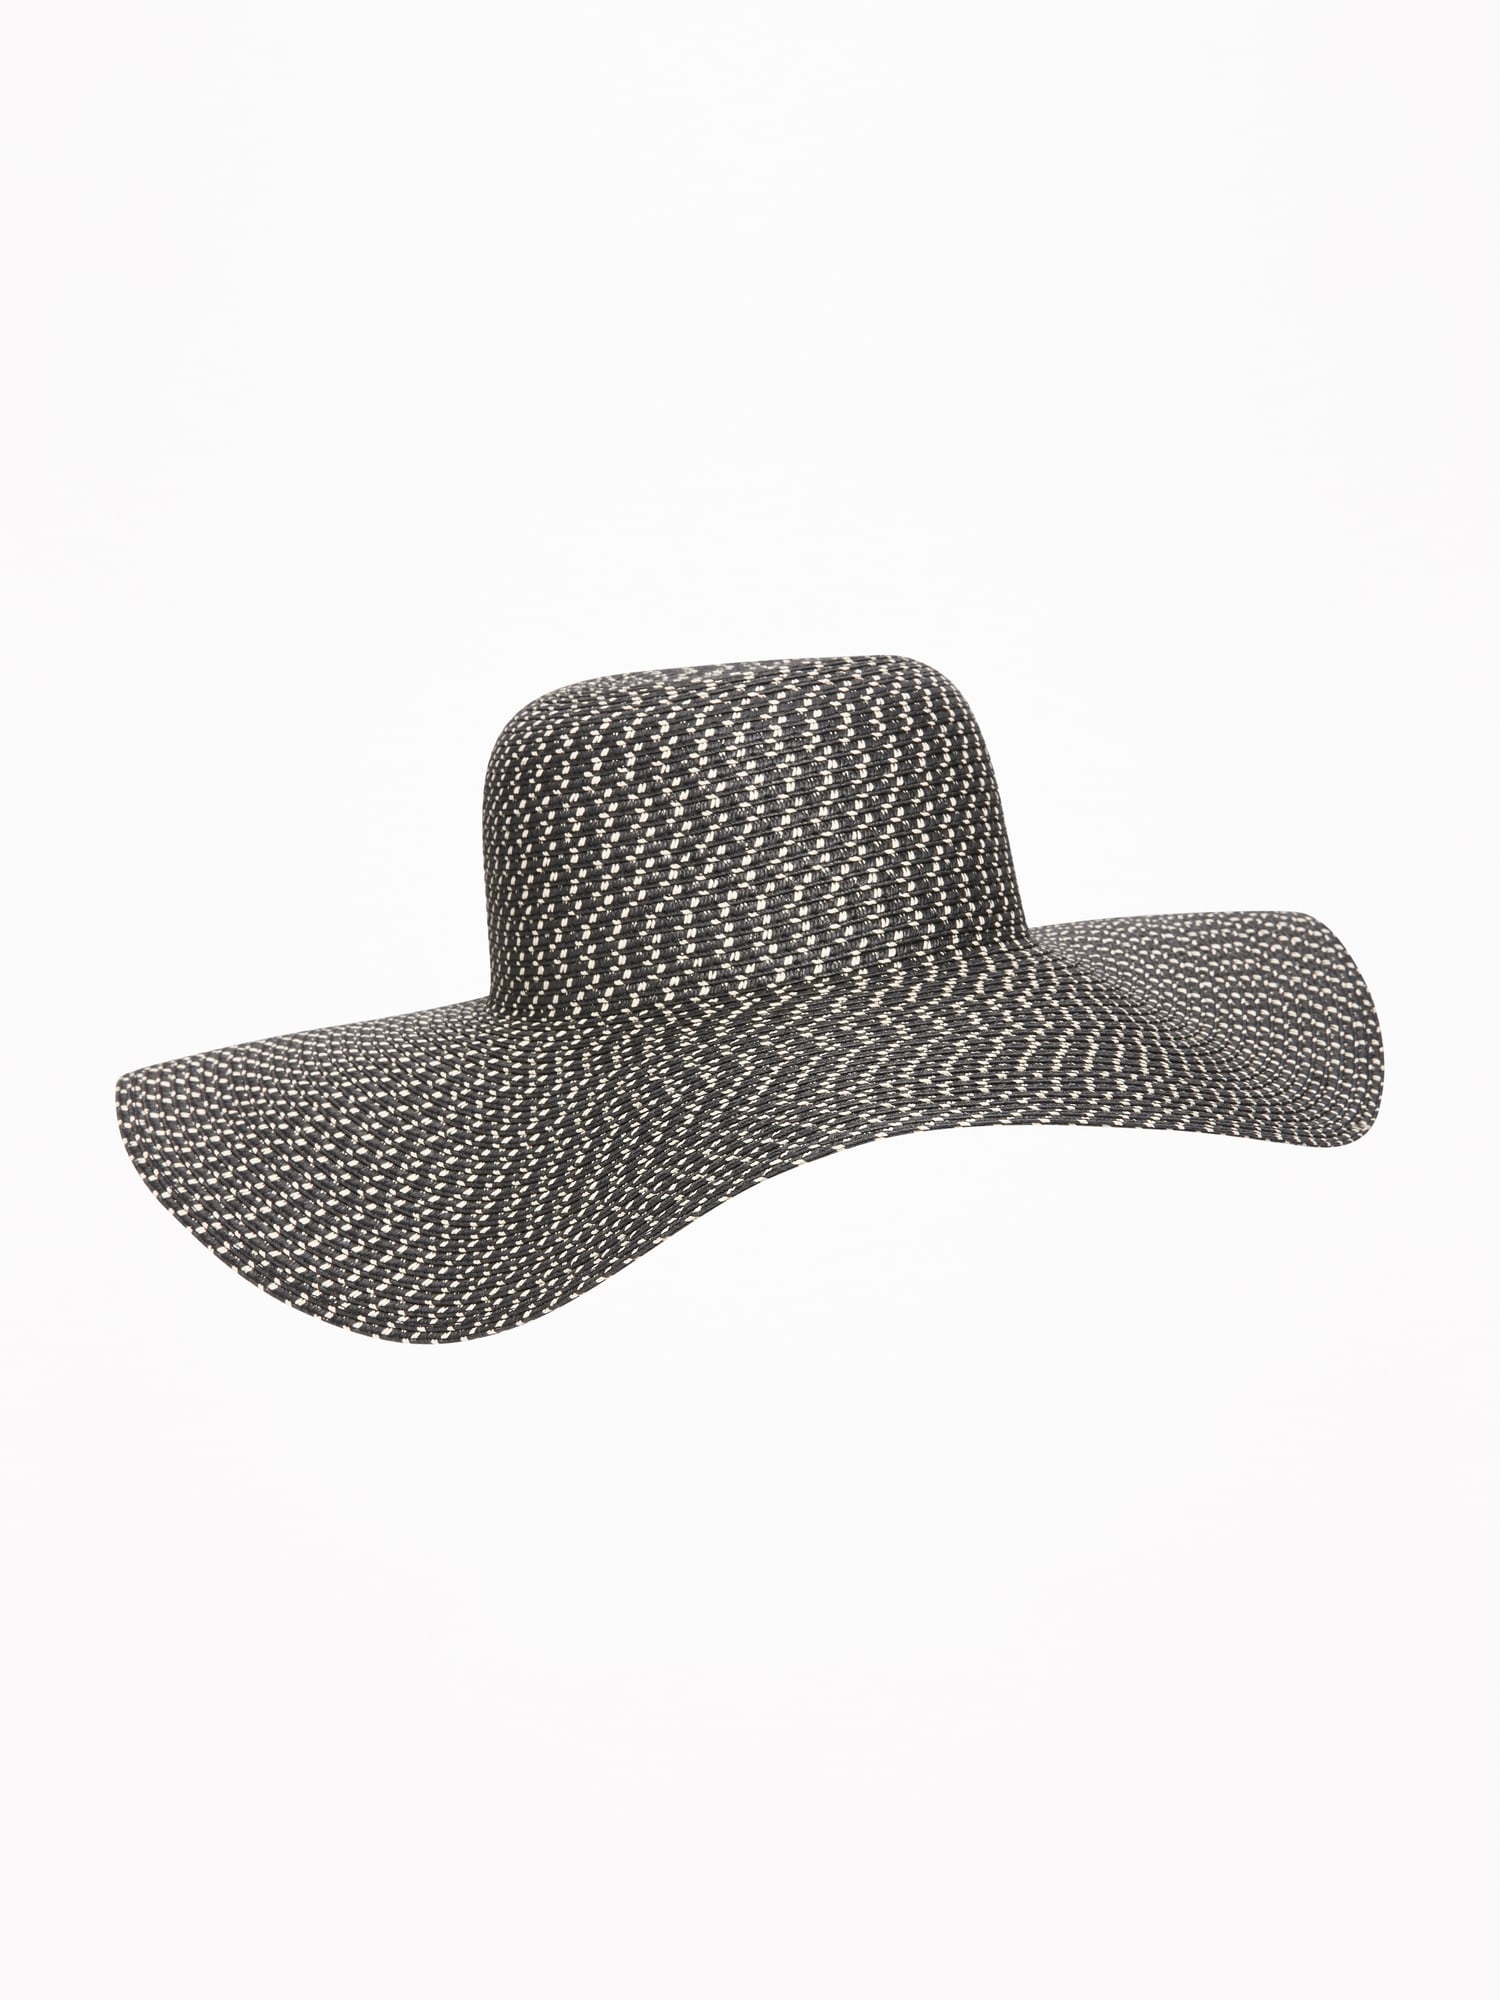 Floppy Straw Sun Hat for Women | Old Navy